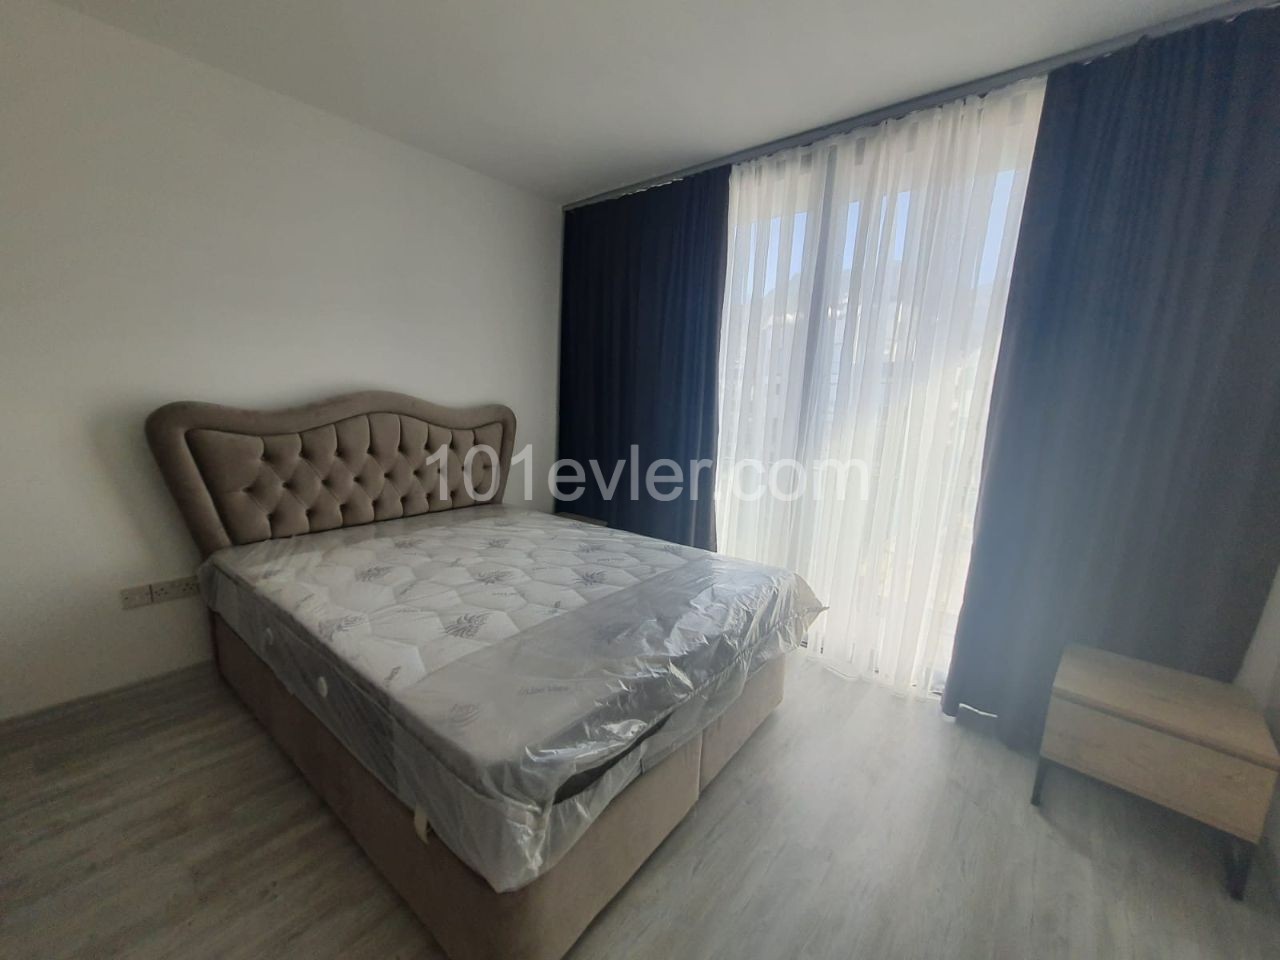 3 bedroom apartment for rent in Kyrenia Center